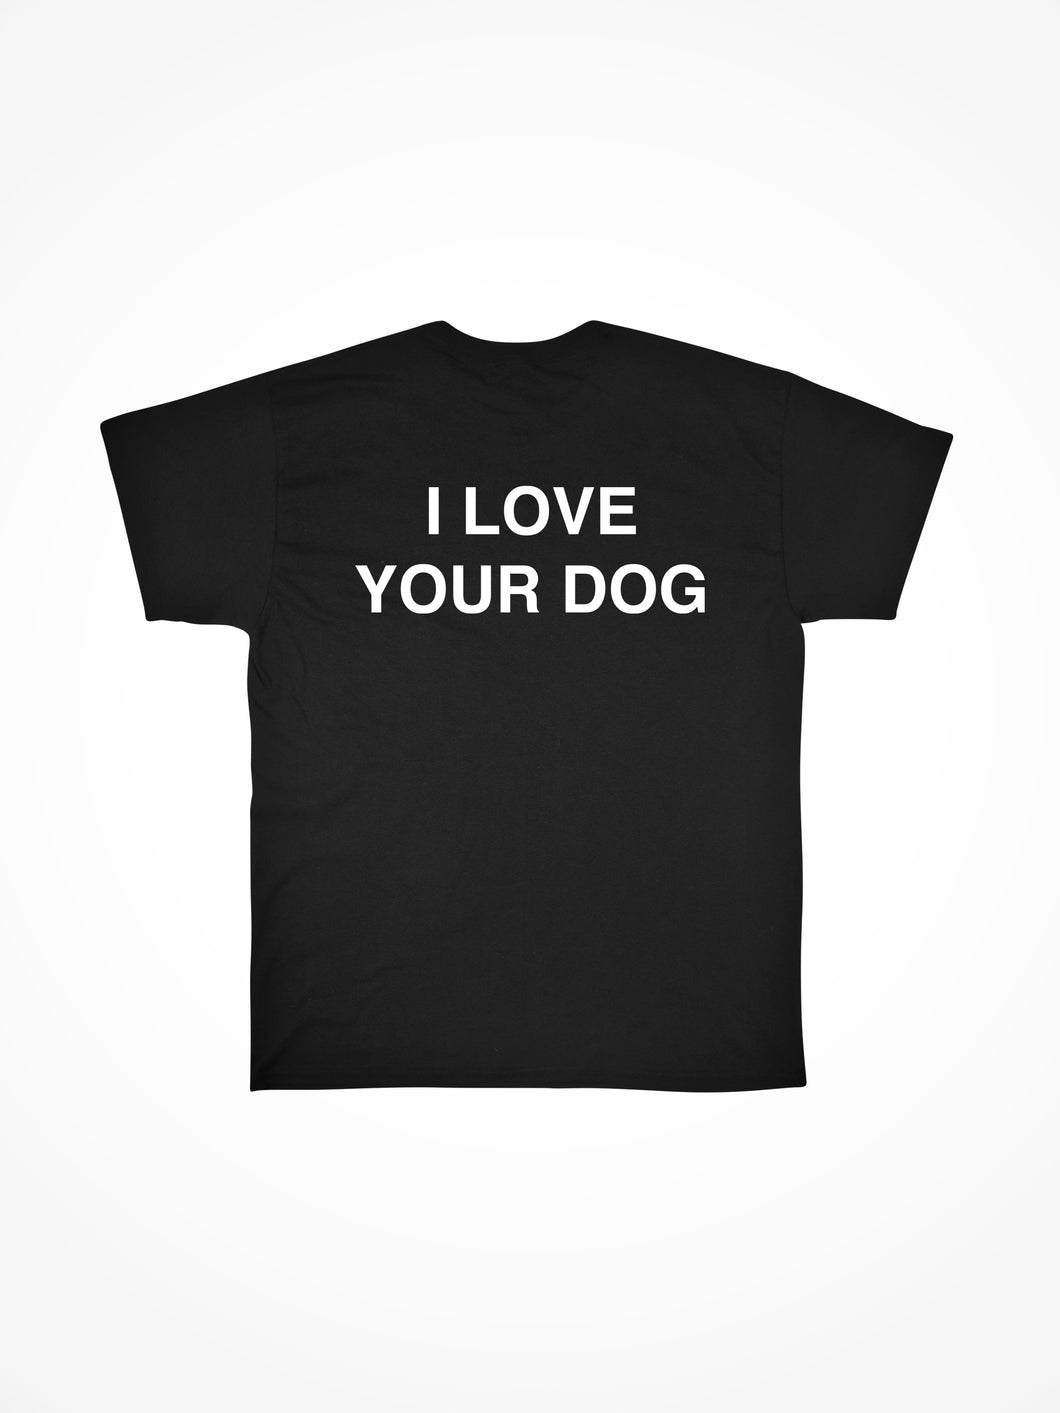 I Love Your Dog - Black Tee